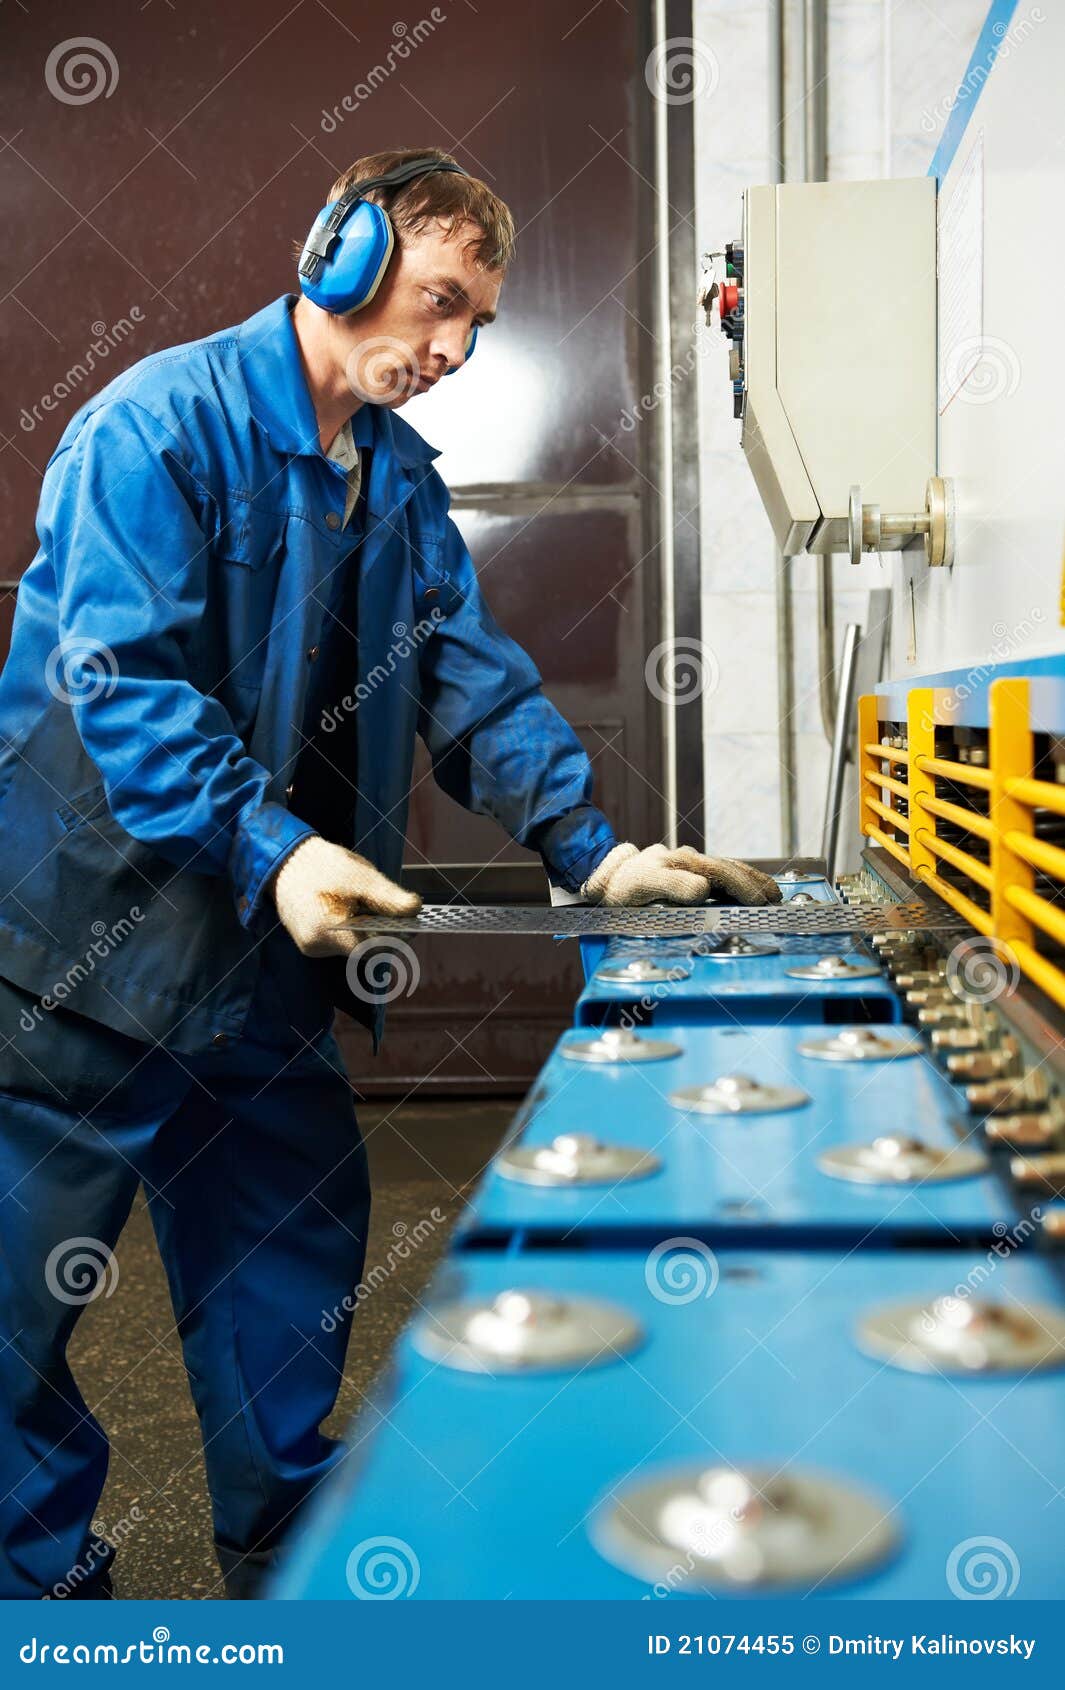 worker operating guillotine shears machine